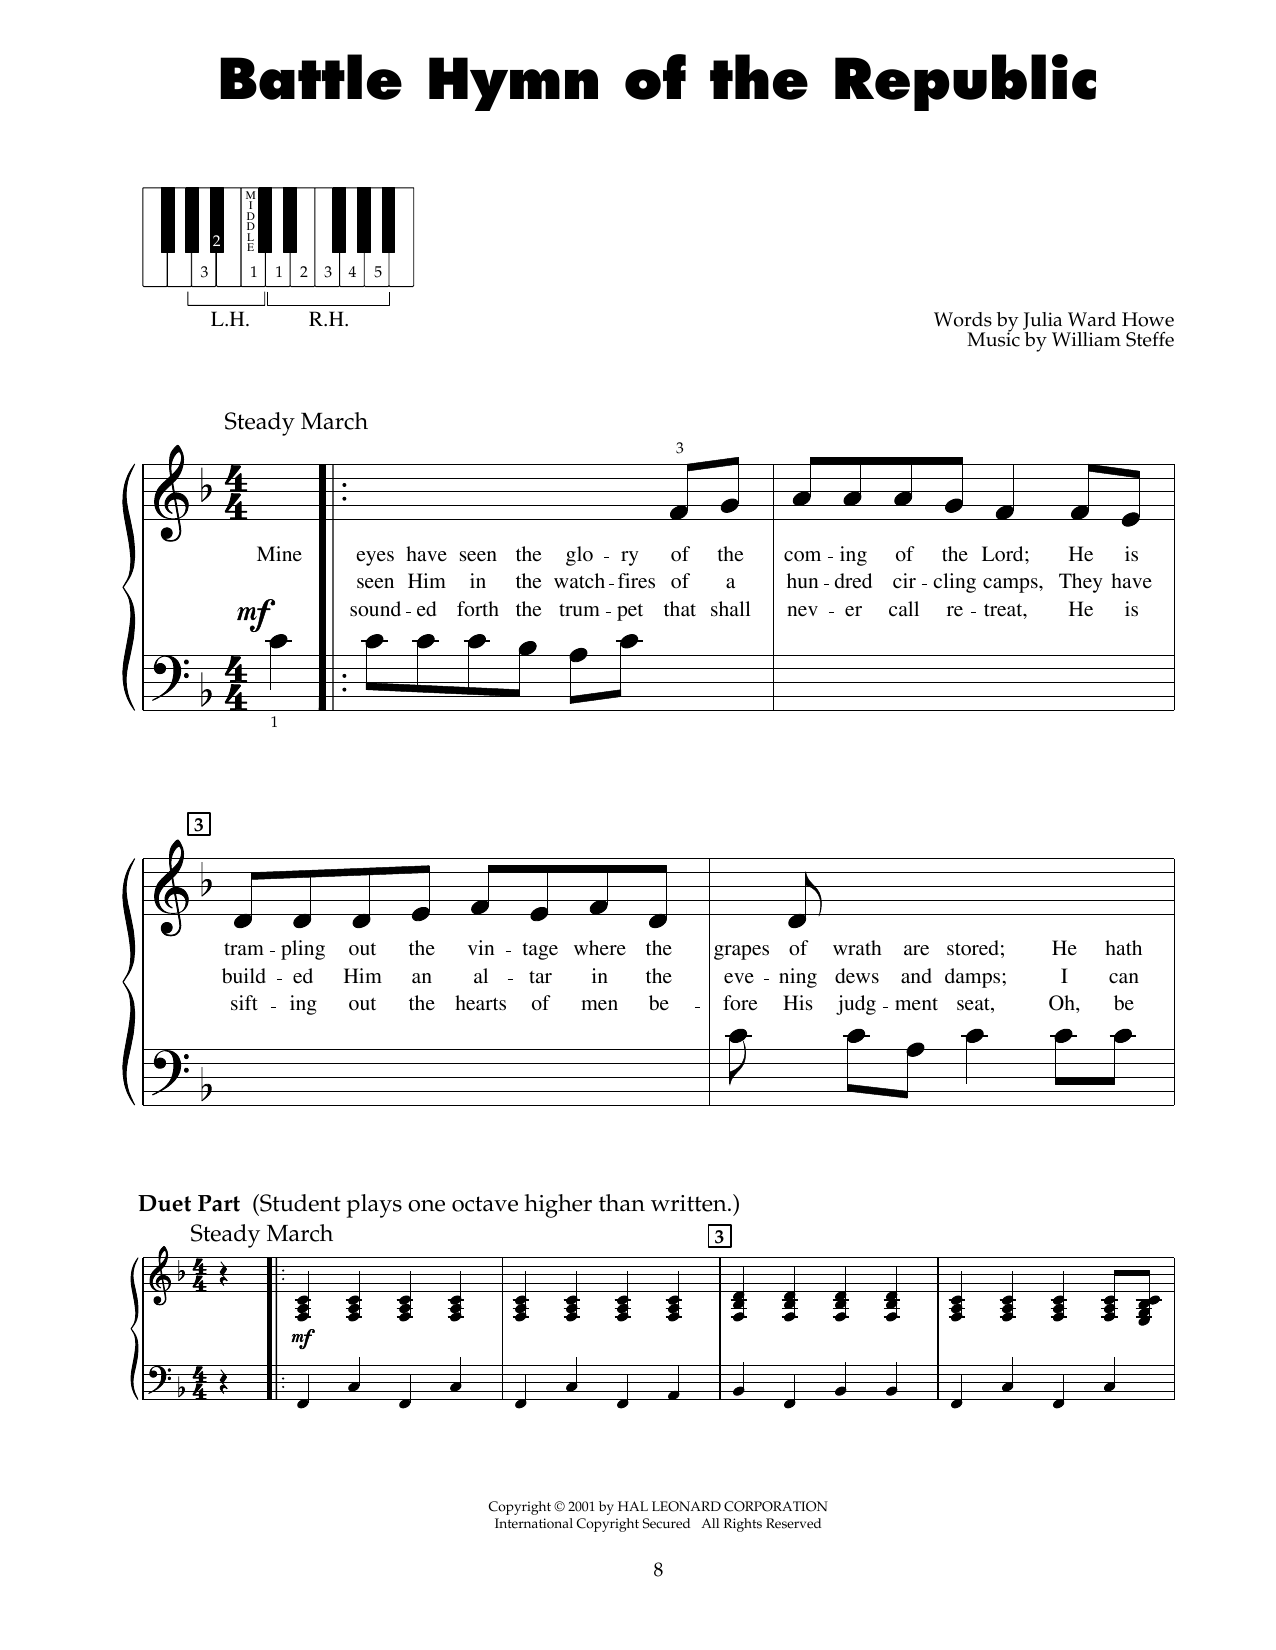 Download Julia Ward Howe Battle Hymn Of The Republic Sheet Music